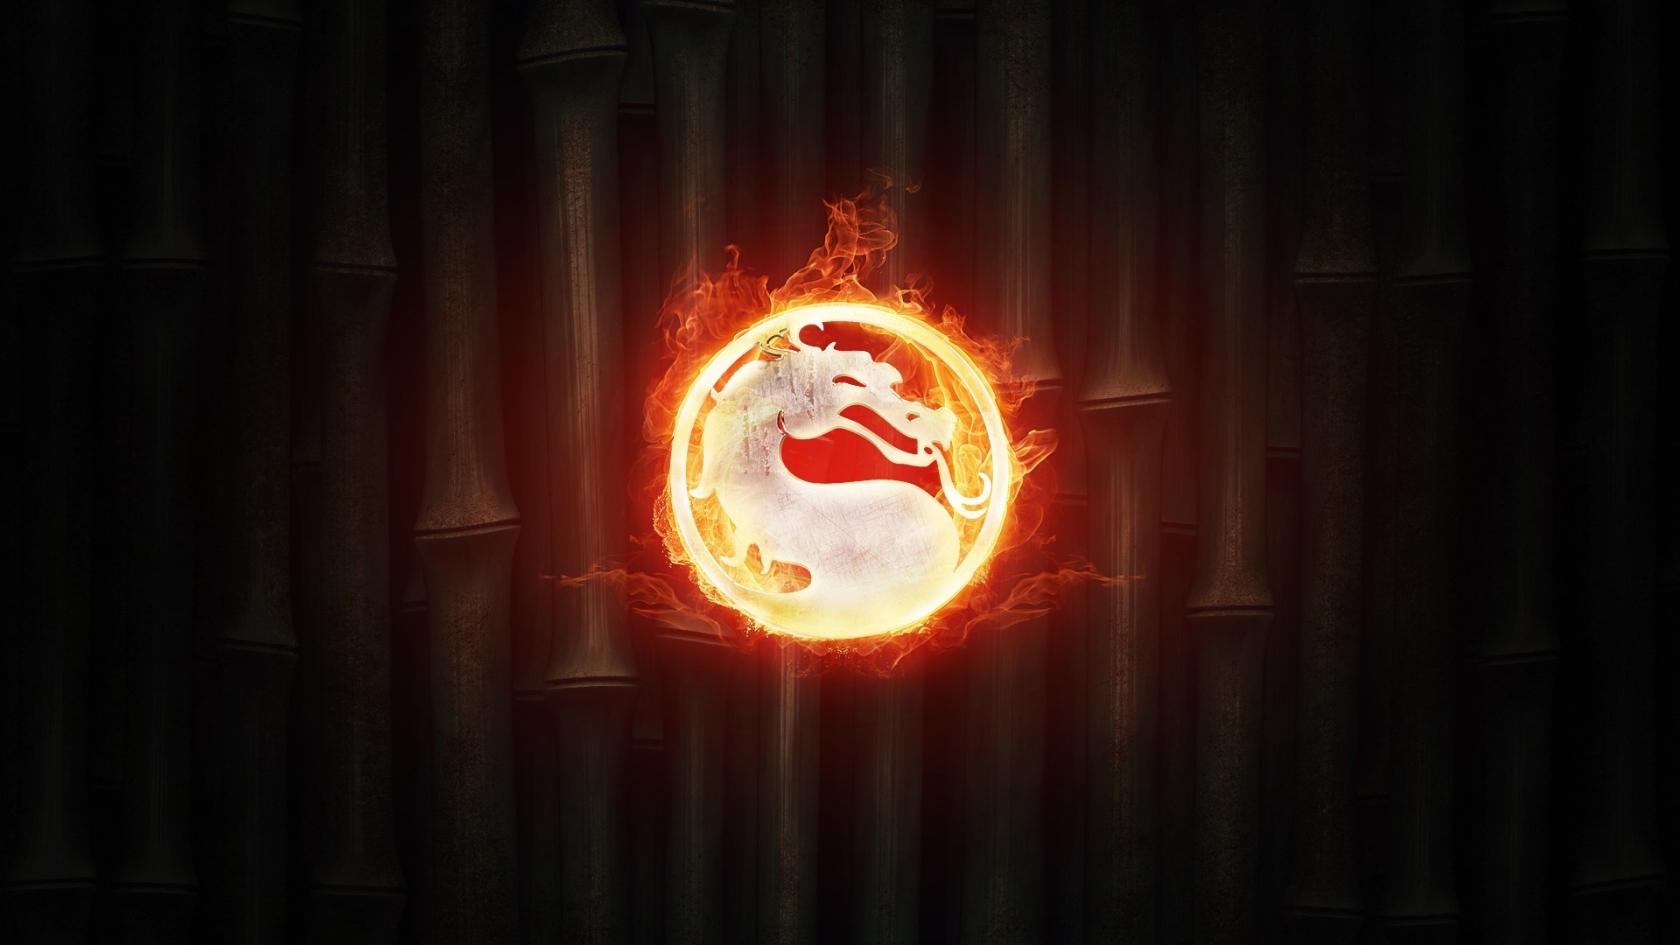 Mortal Kombat Fire for 1680 x 945 HDTV resolution